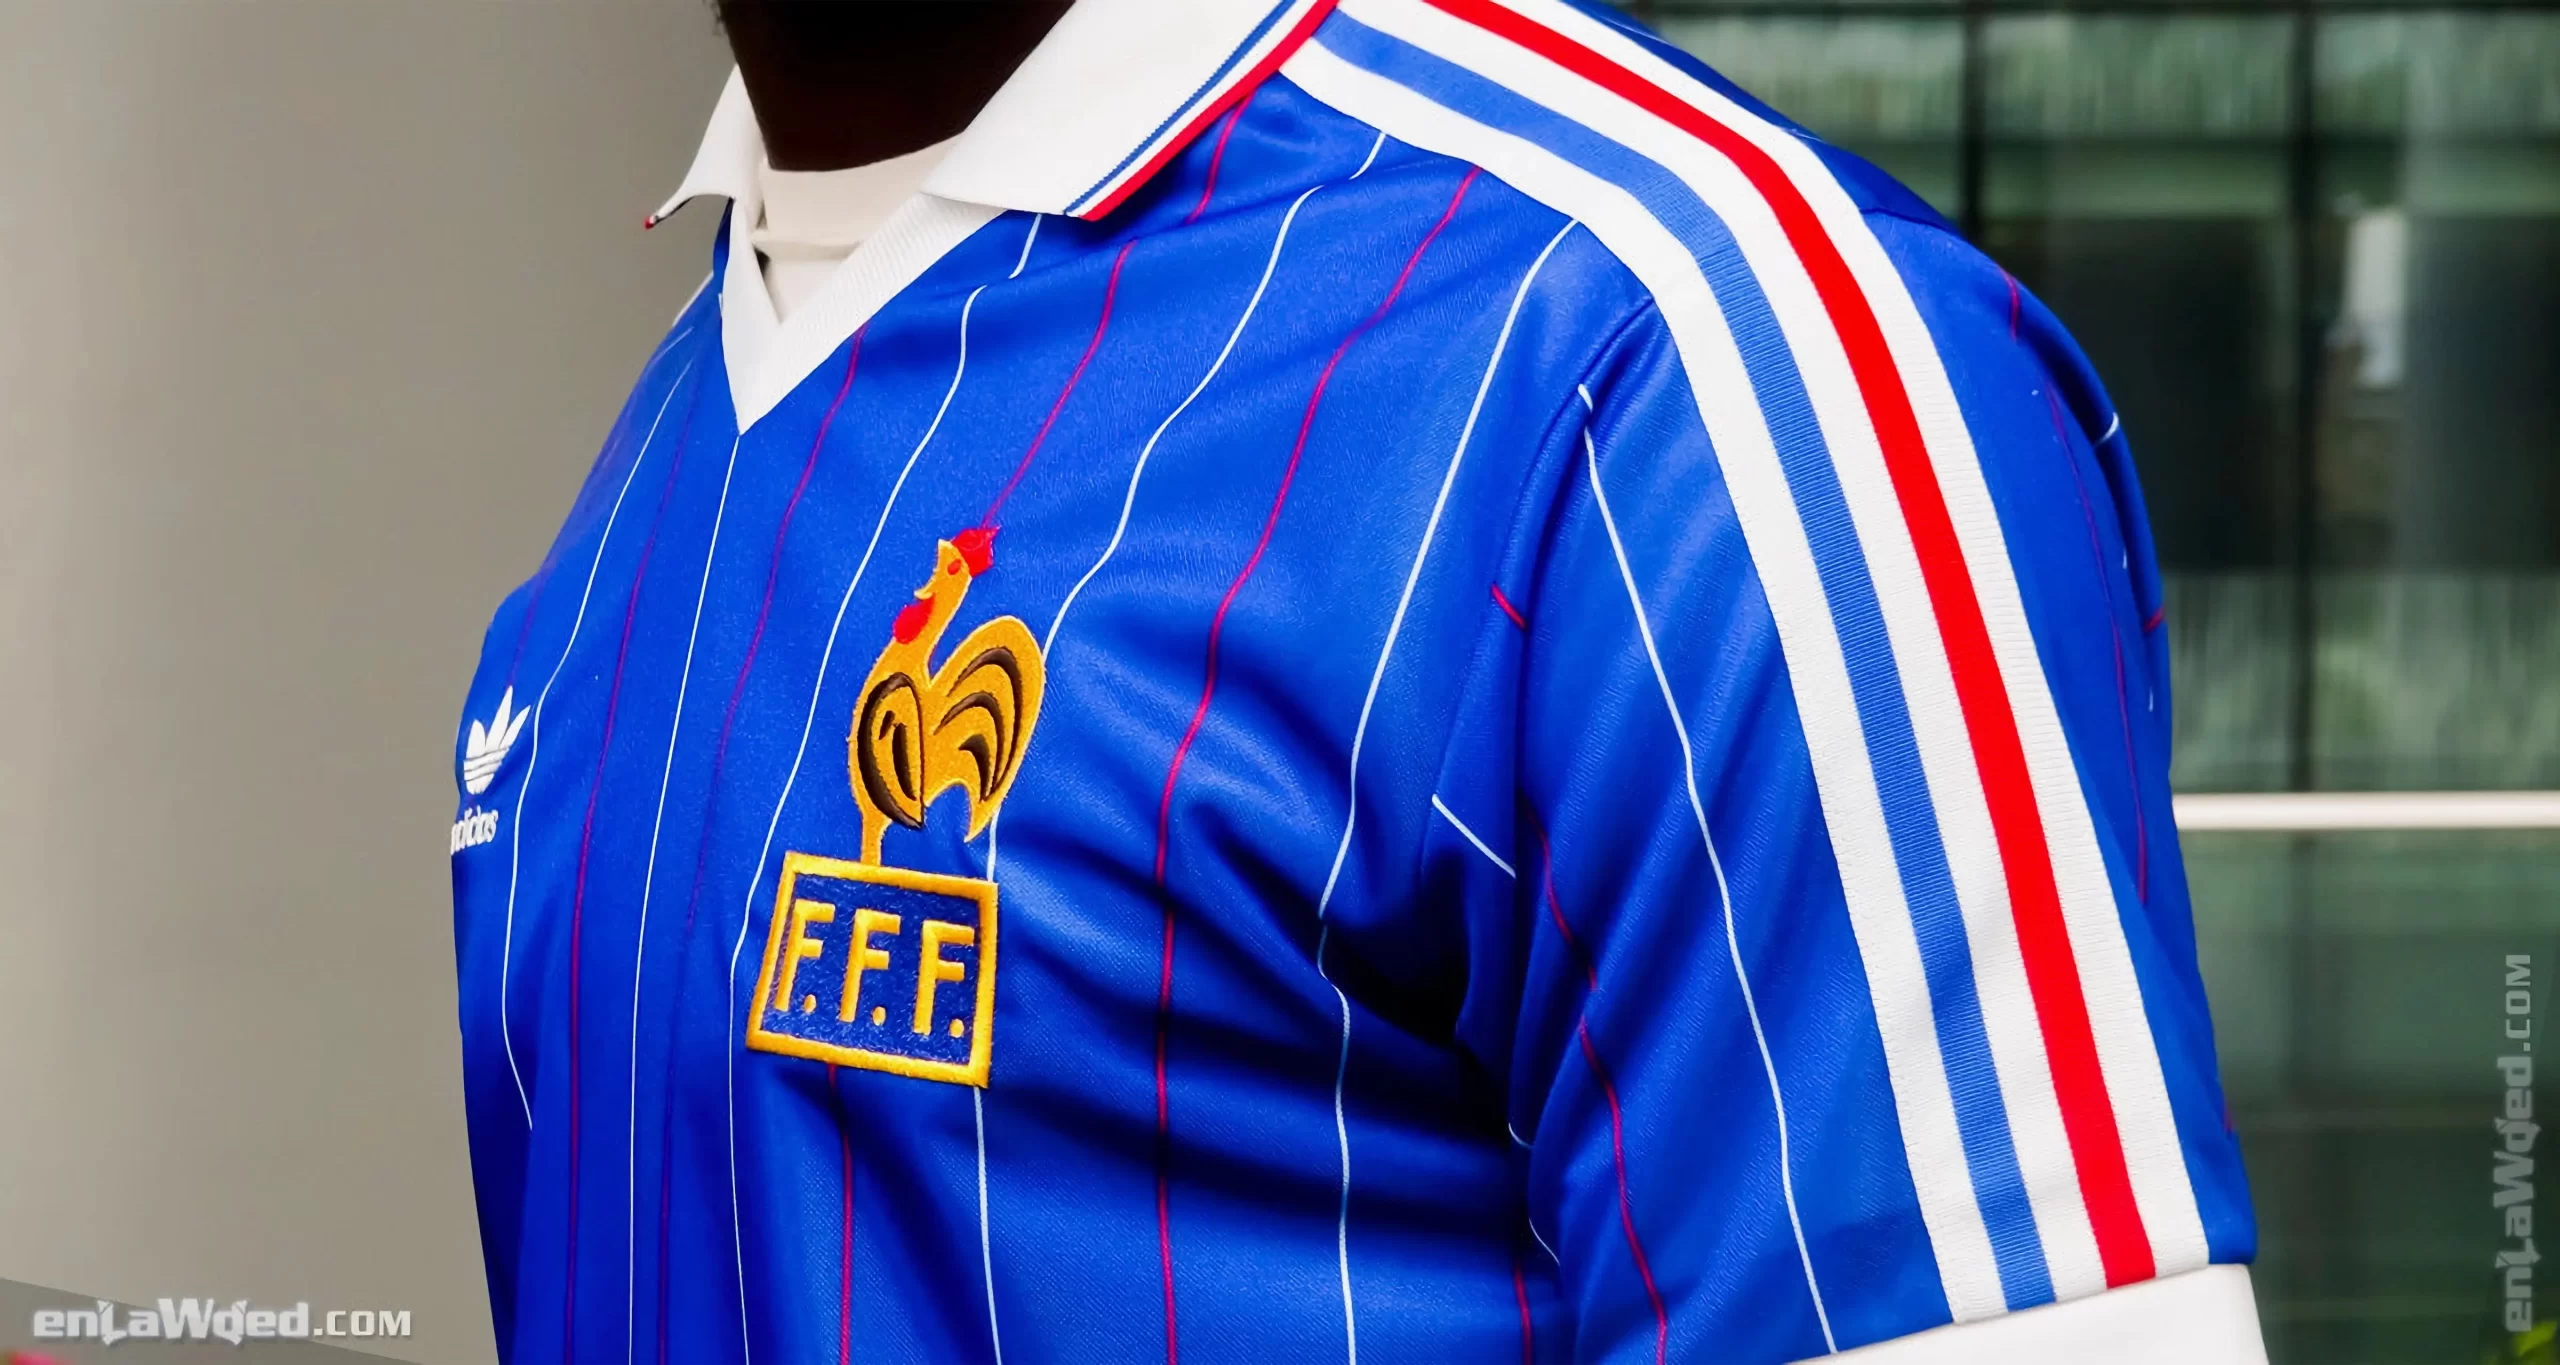 Men’s 2005 France ’82 Carre Magique Jersey by Adidas: Devoted (EnLawded.com file #lmchk90388ip2y122973kg9st)